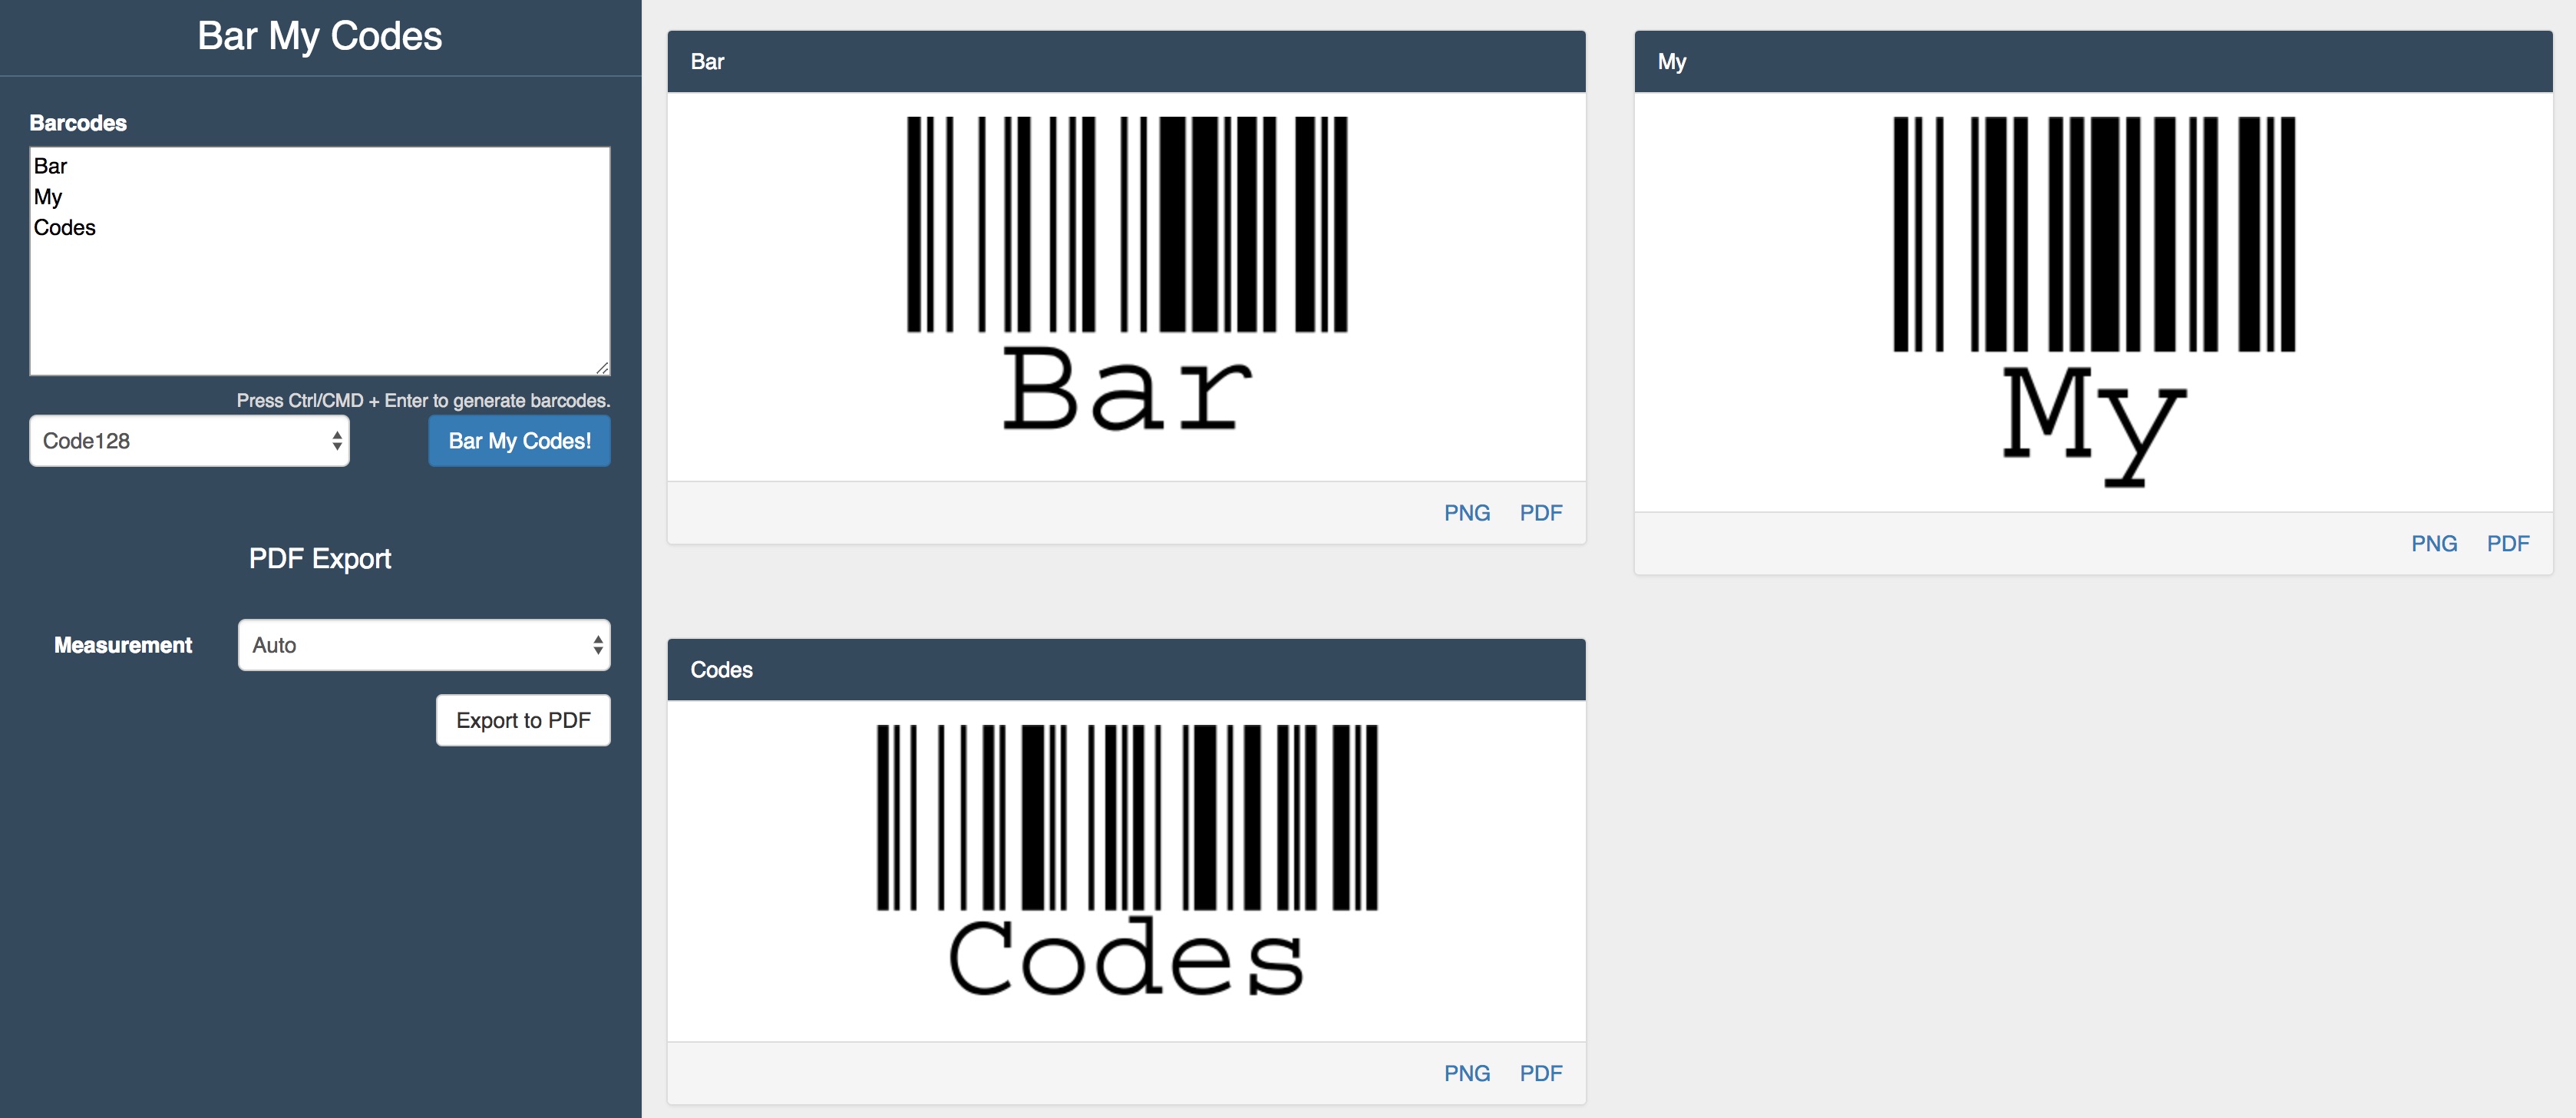 Bar My Codes